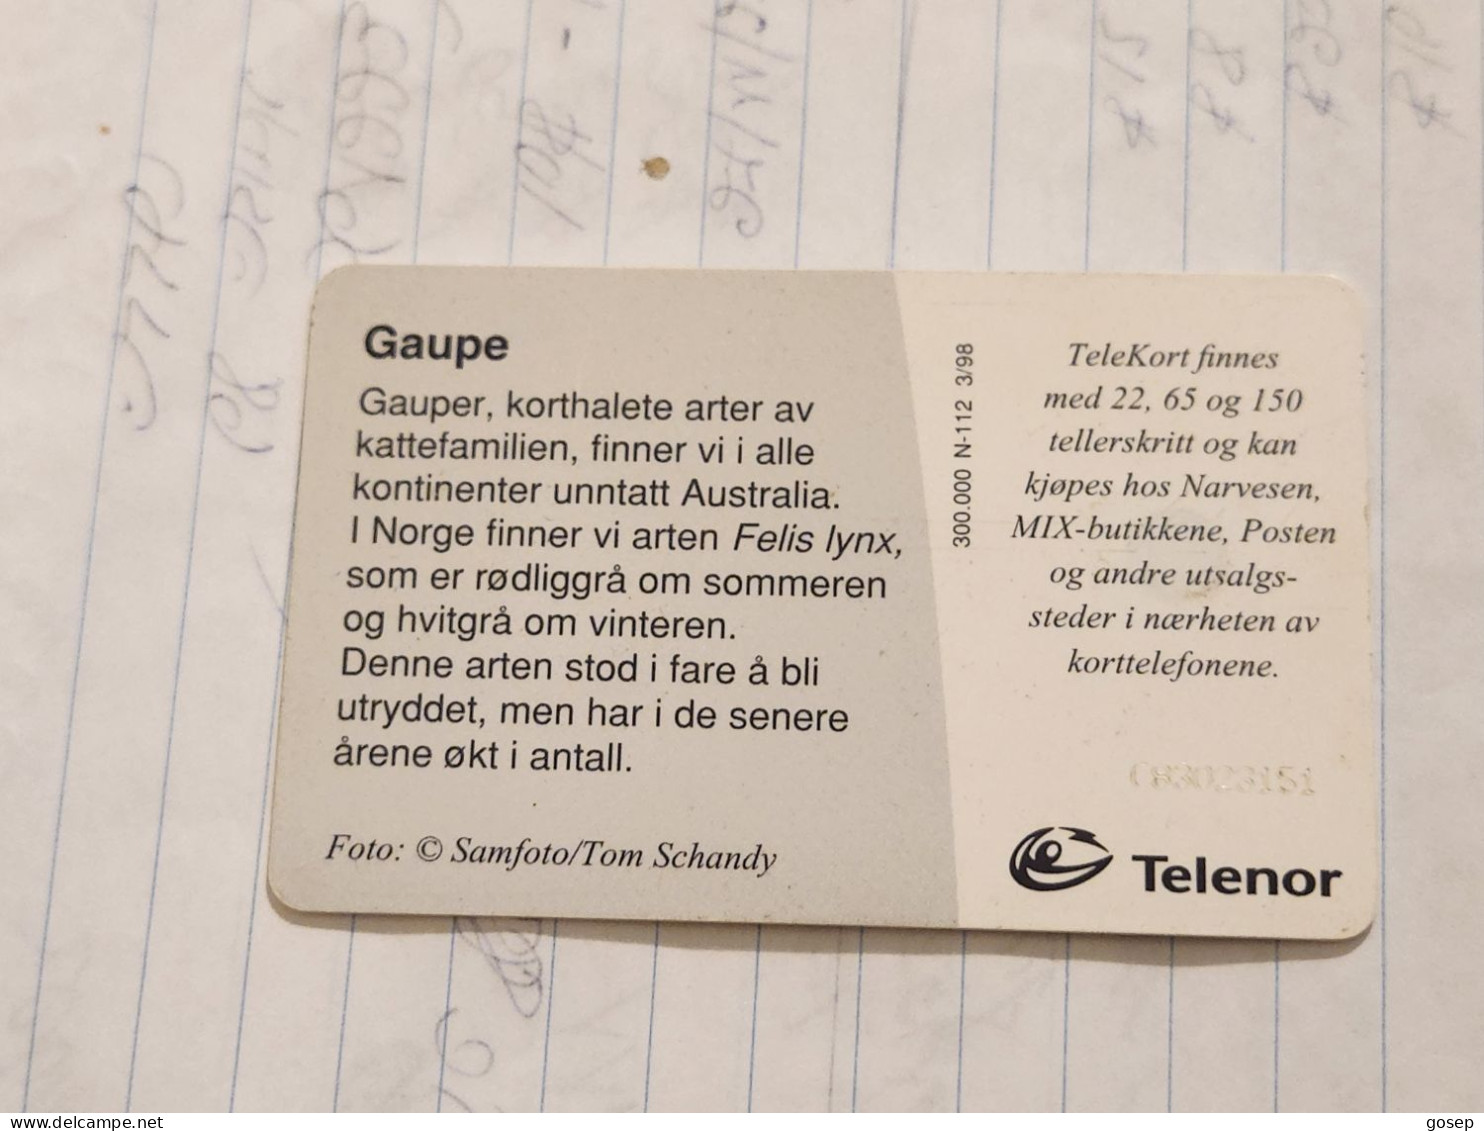 Norway-(N-112)-Gaupe / Lynx-(22 Tellerskritt)-(69)-(C83023151)-used Card+1card Prepiad Free - Norvège